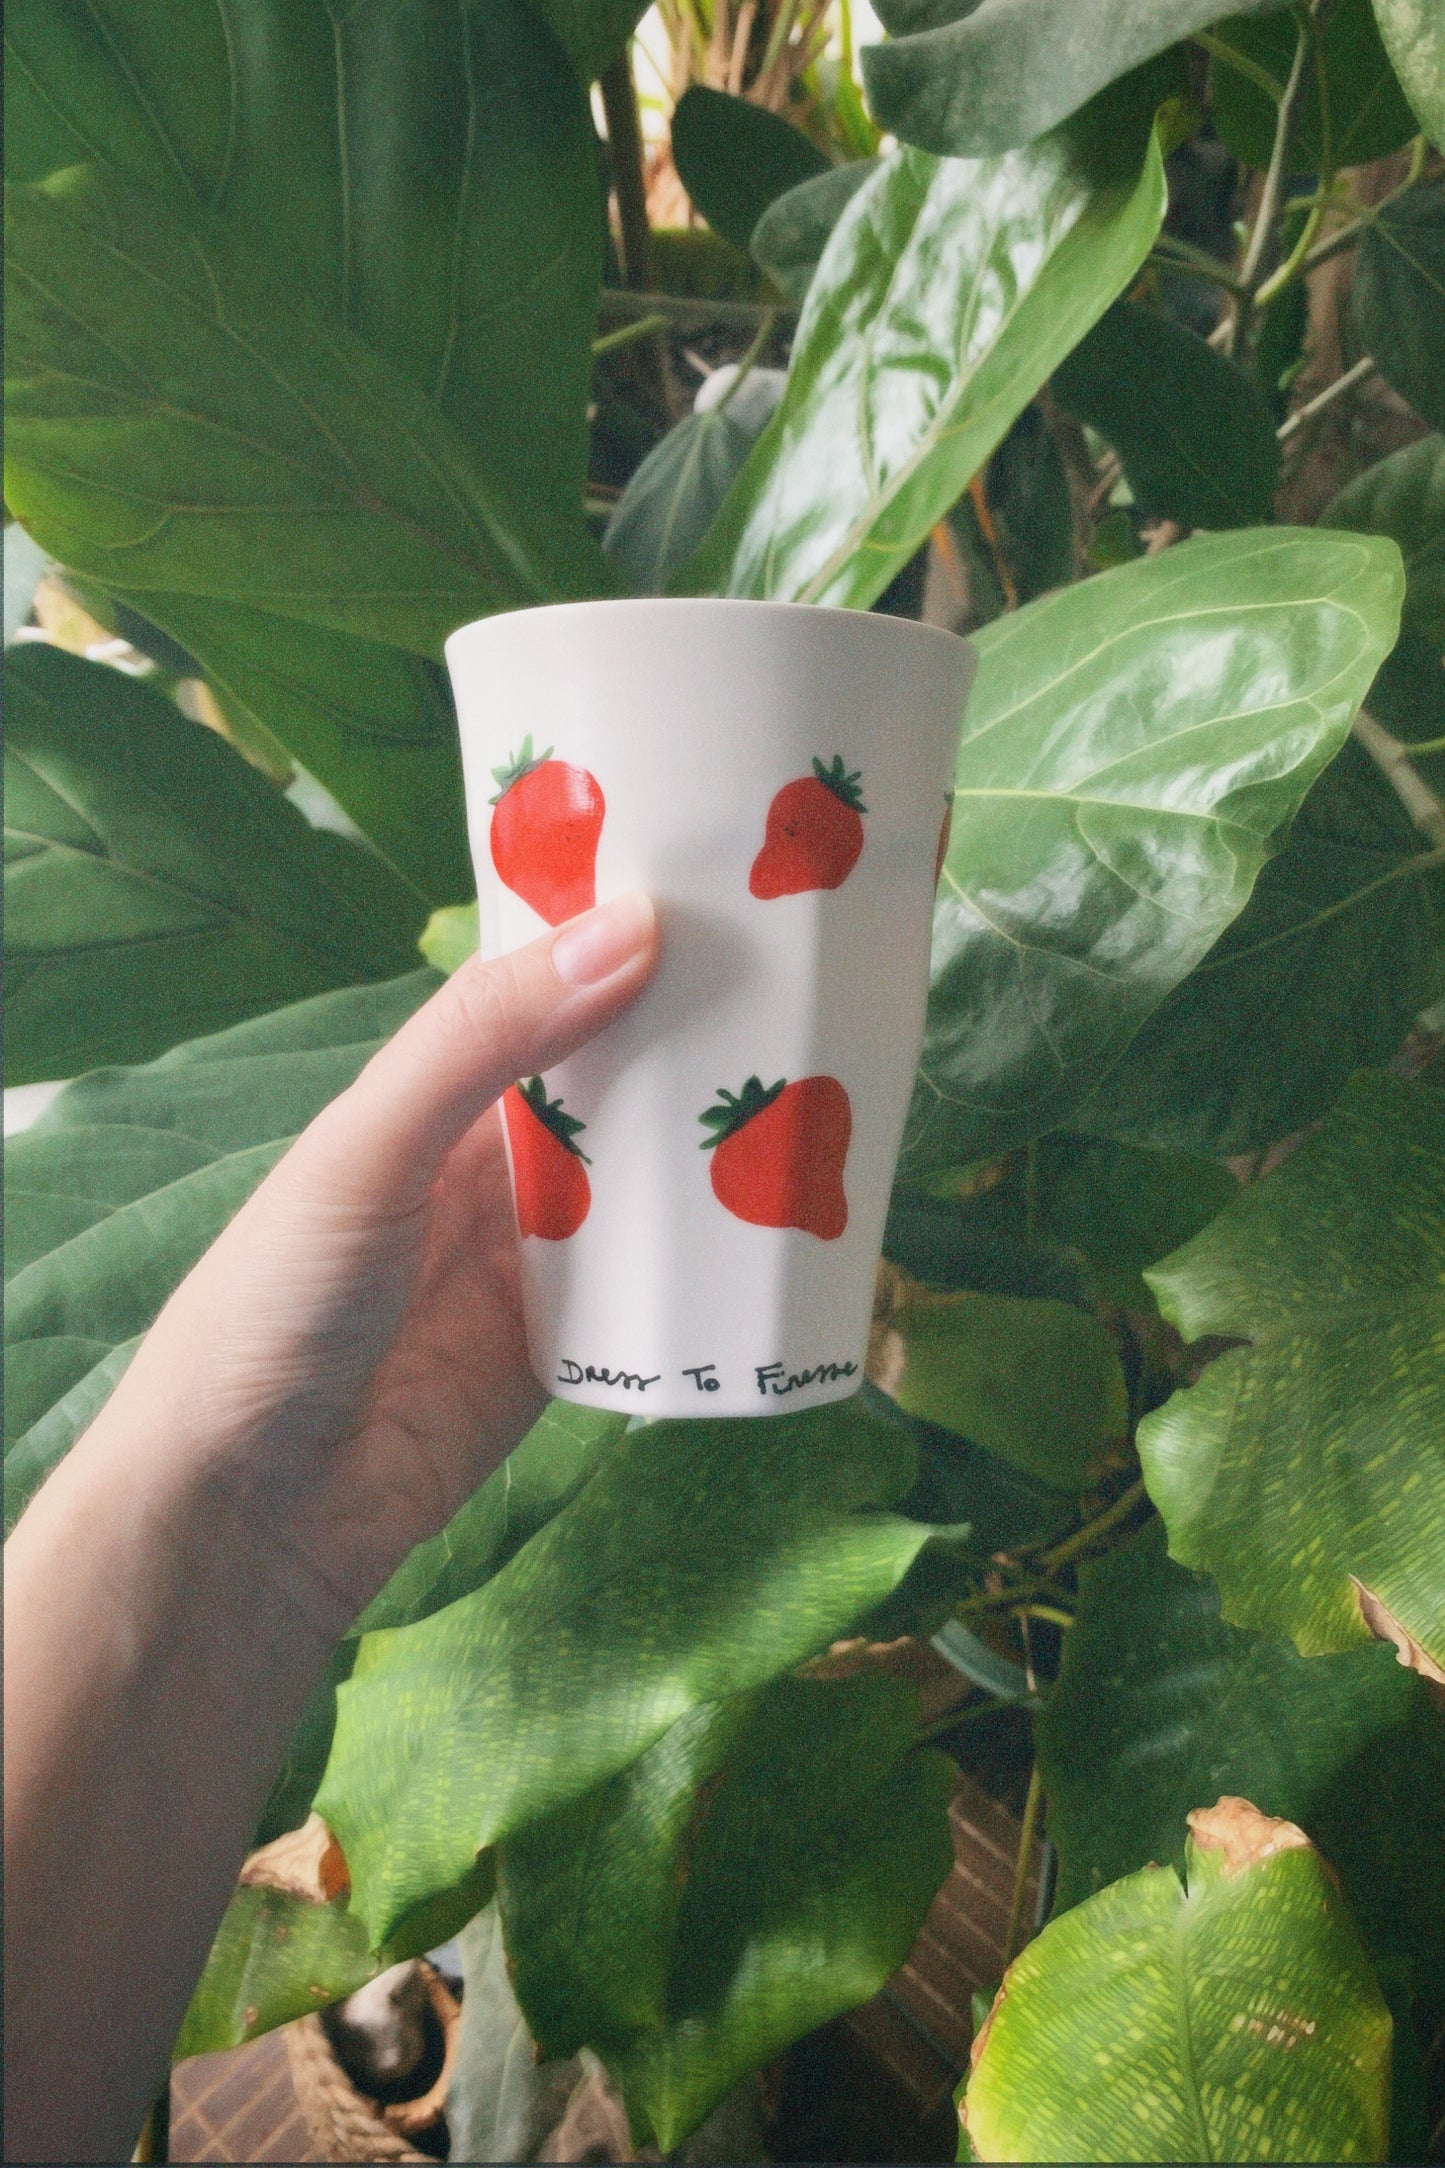 Porcelain FRUITY latte mug - Strawberry